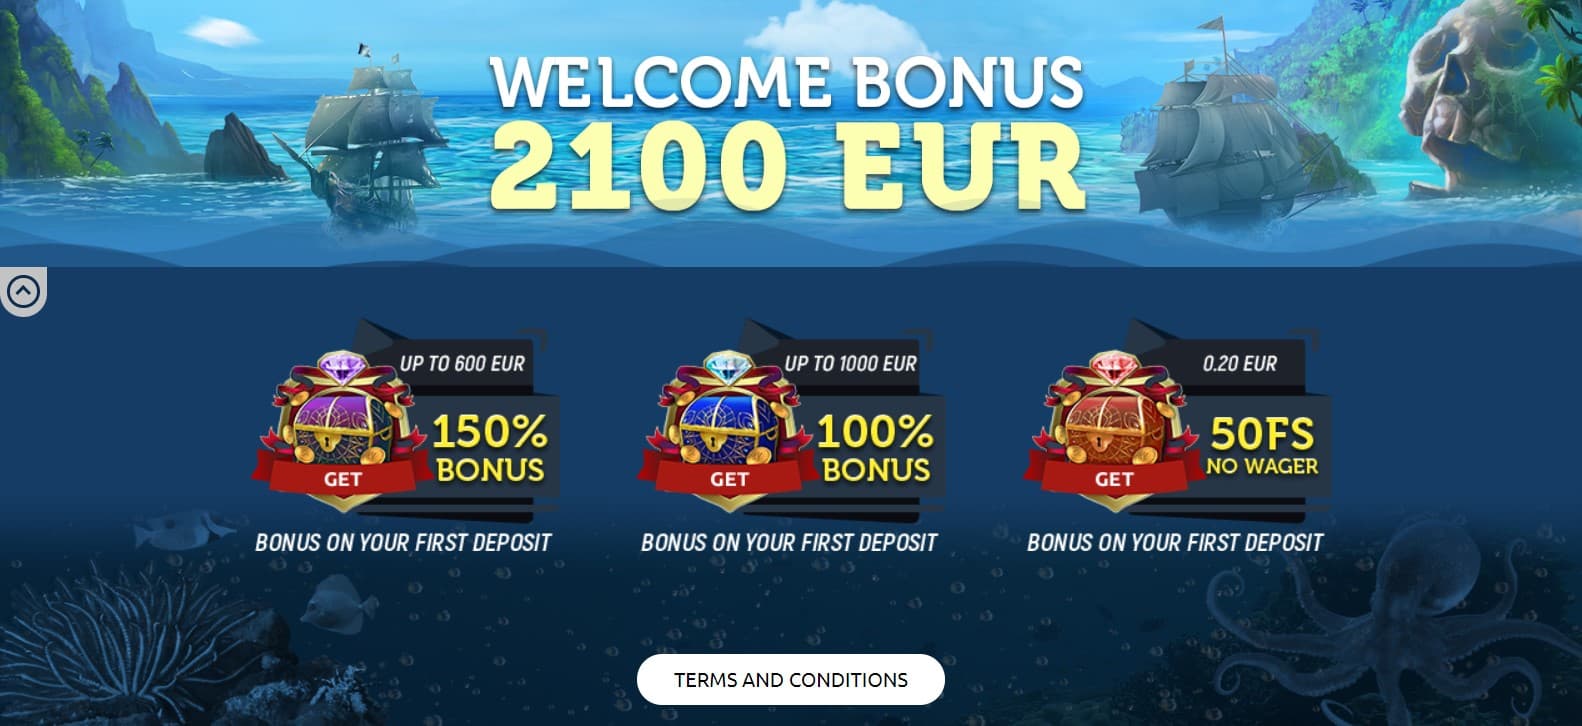 bonanza welcome bonus